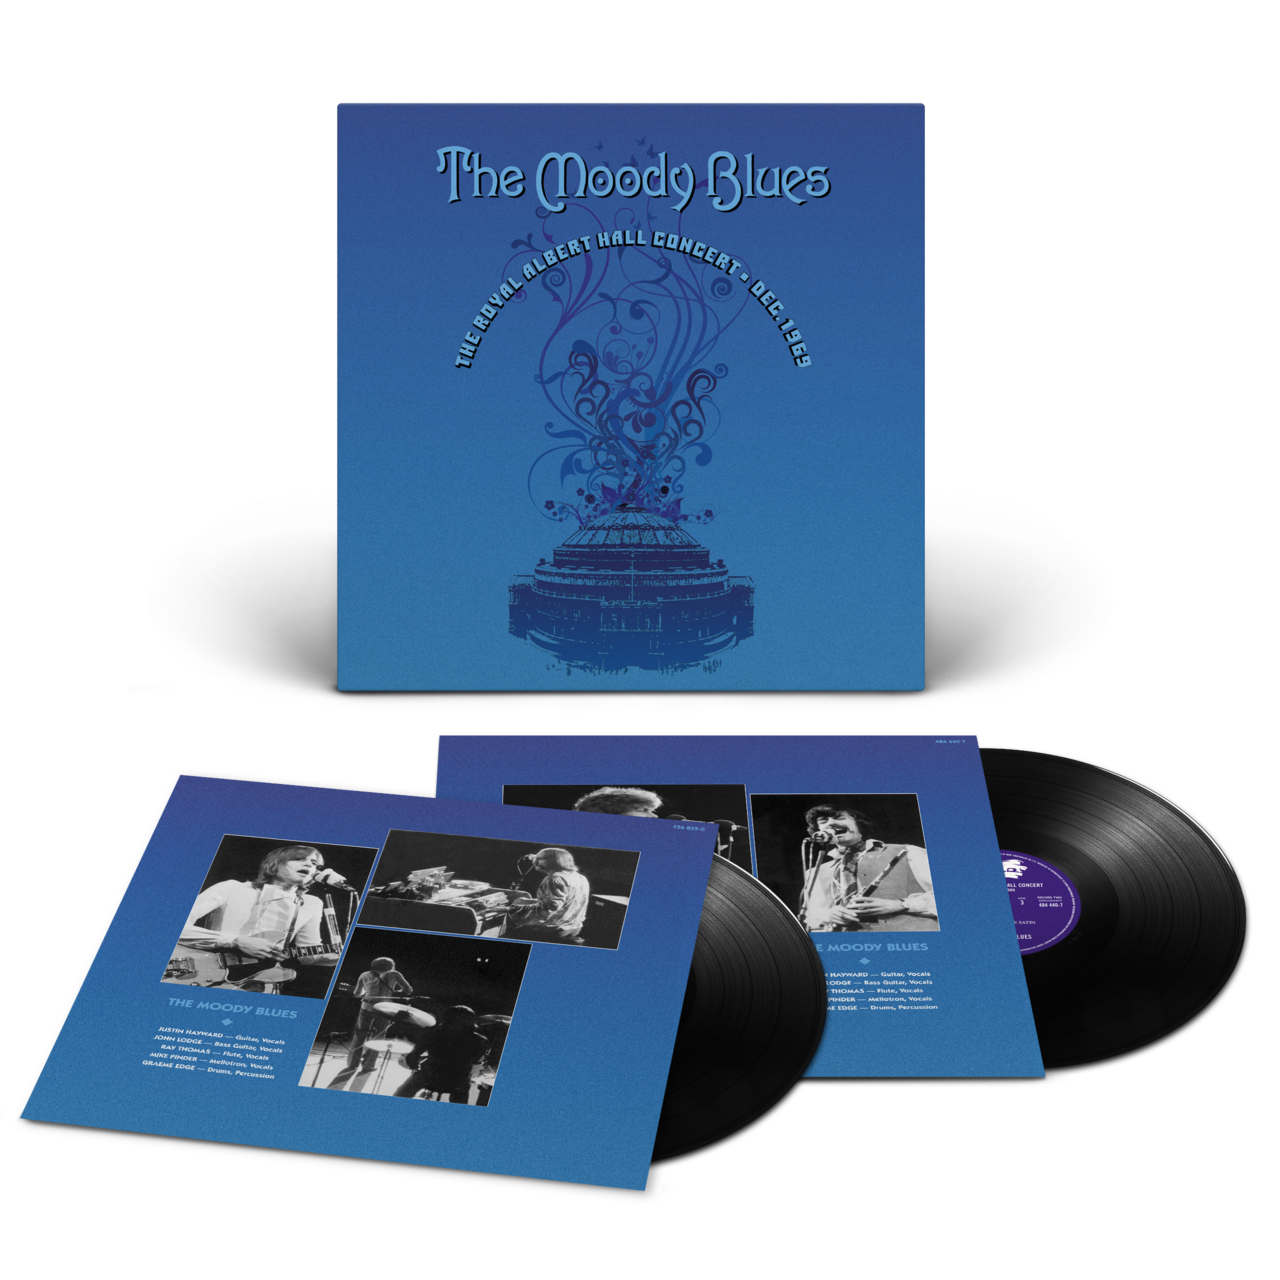 The Moody Blues - The Royal Albert Hall Concert December 1969: Vinyl LP + 12"